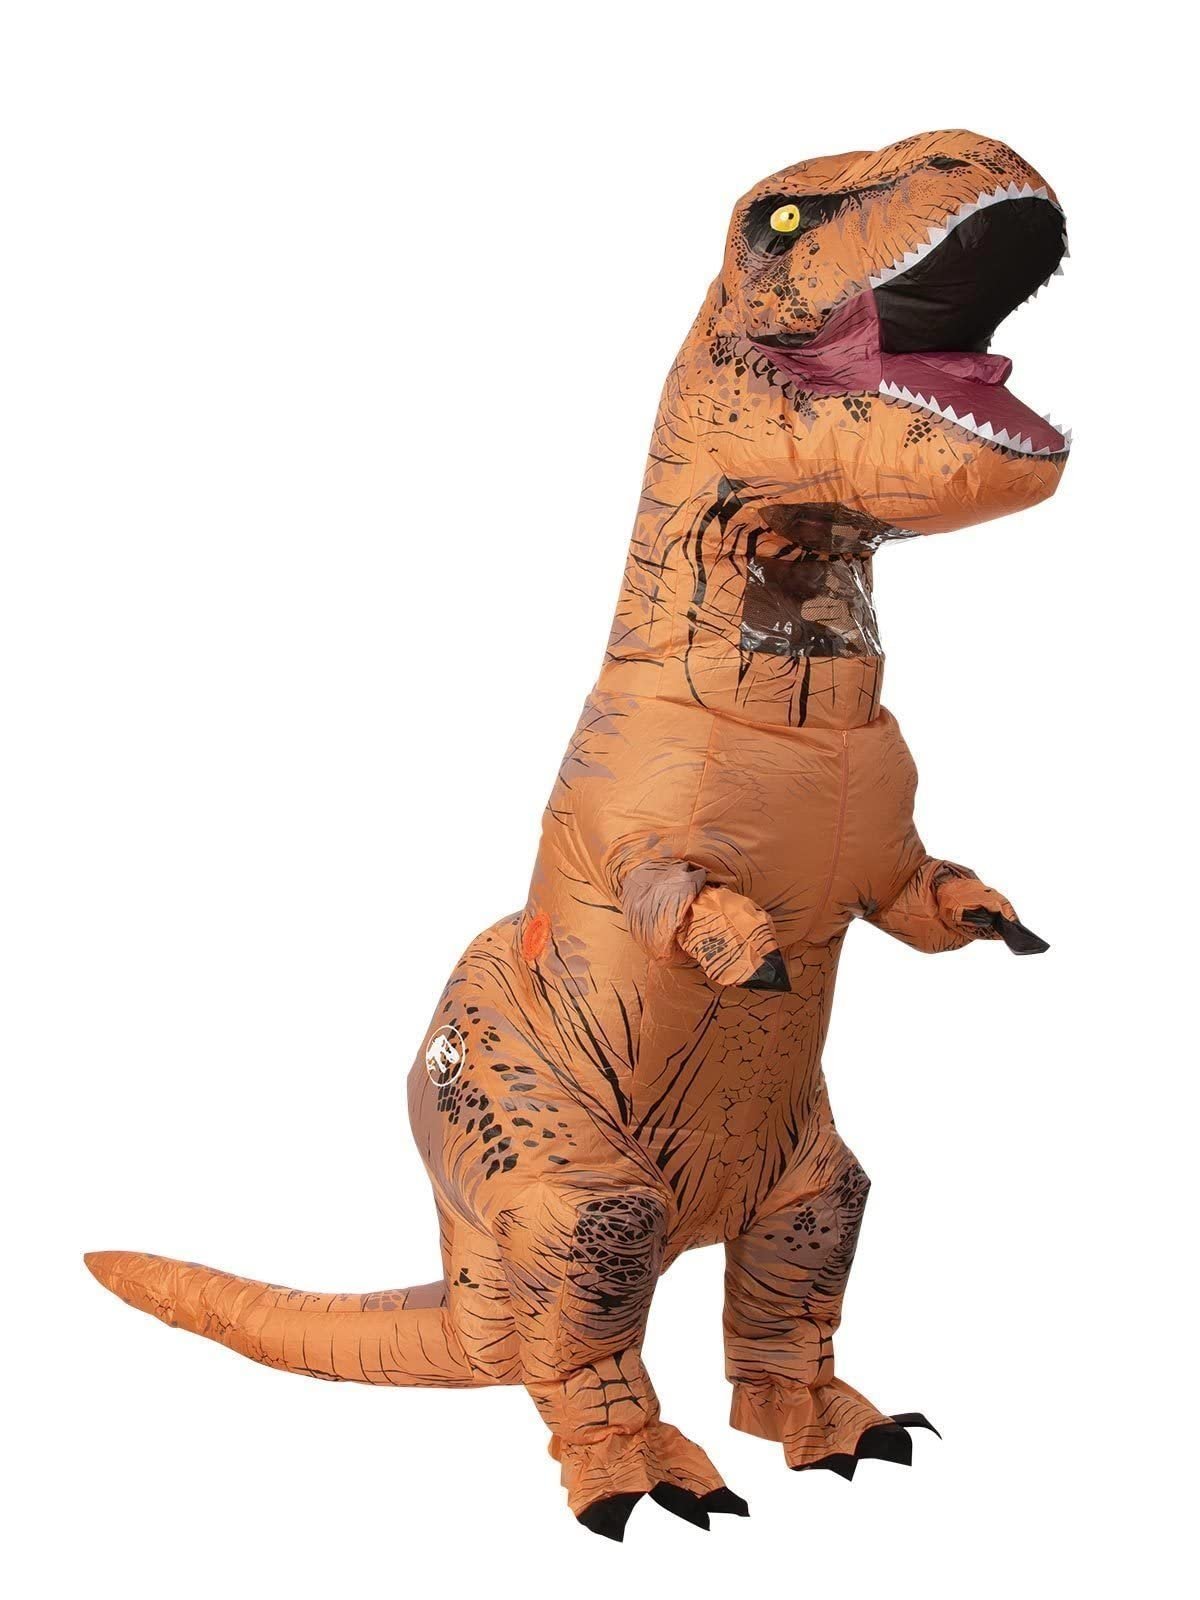 Teen Original Inflatable Dinosaur Costume, T-Rex